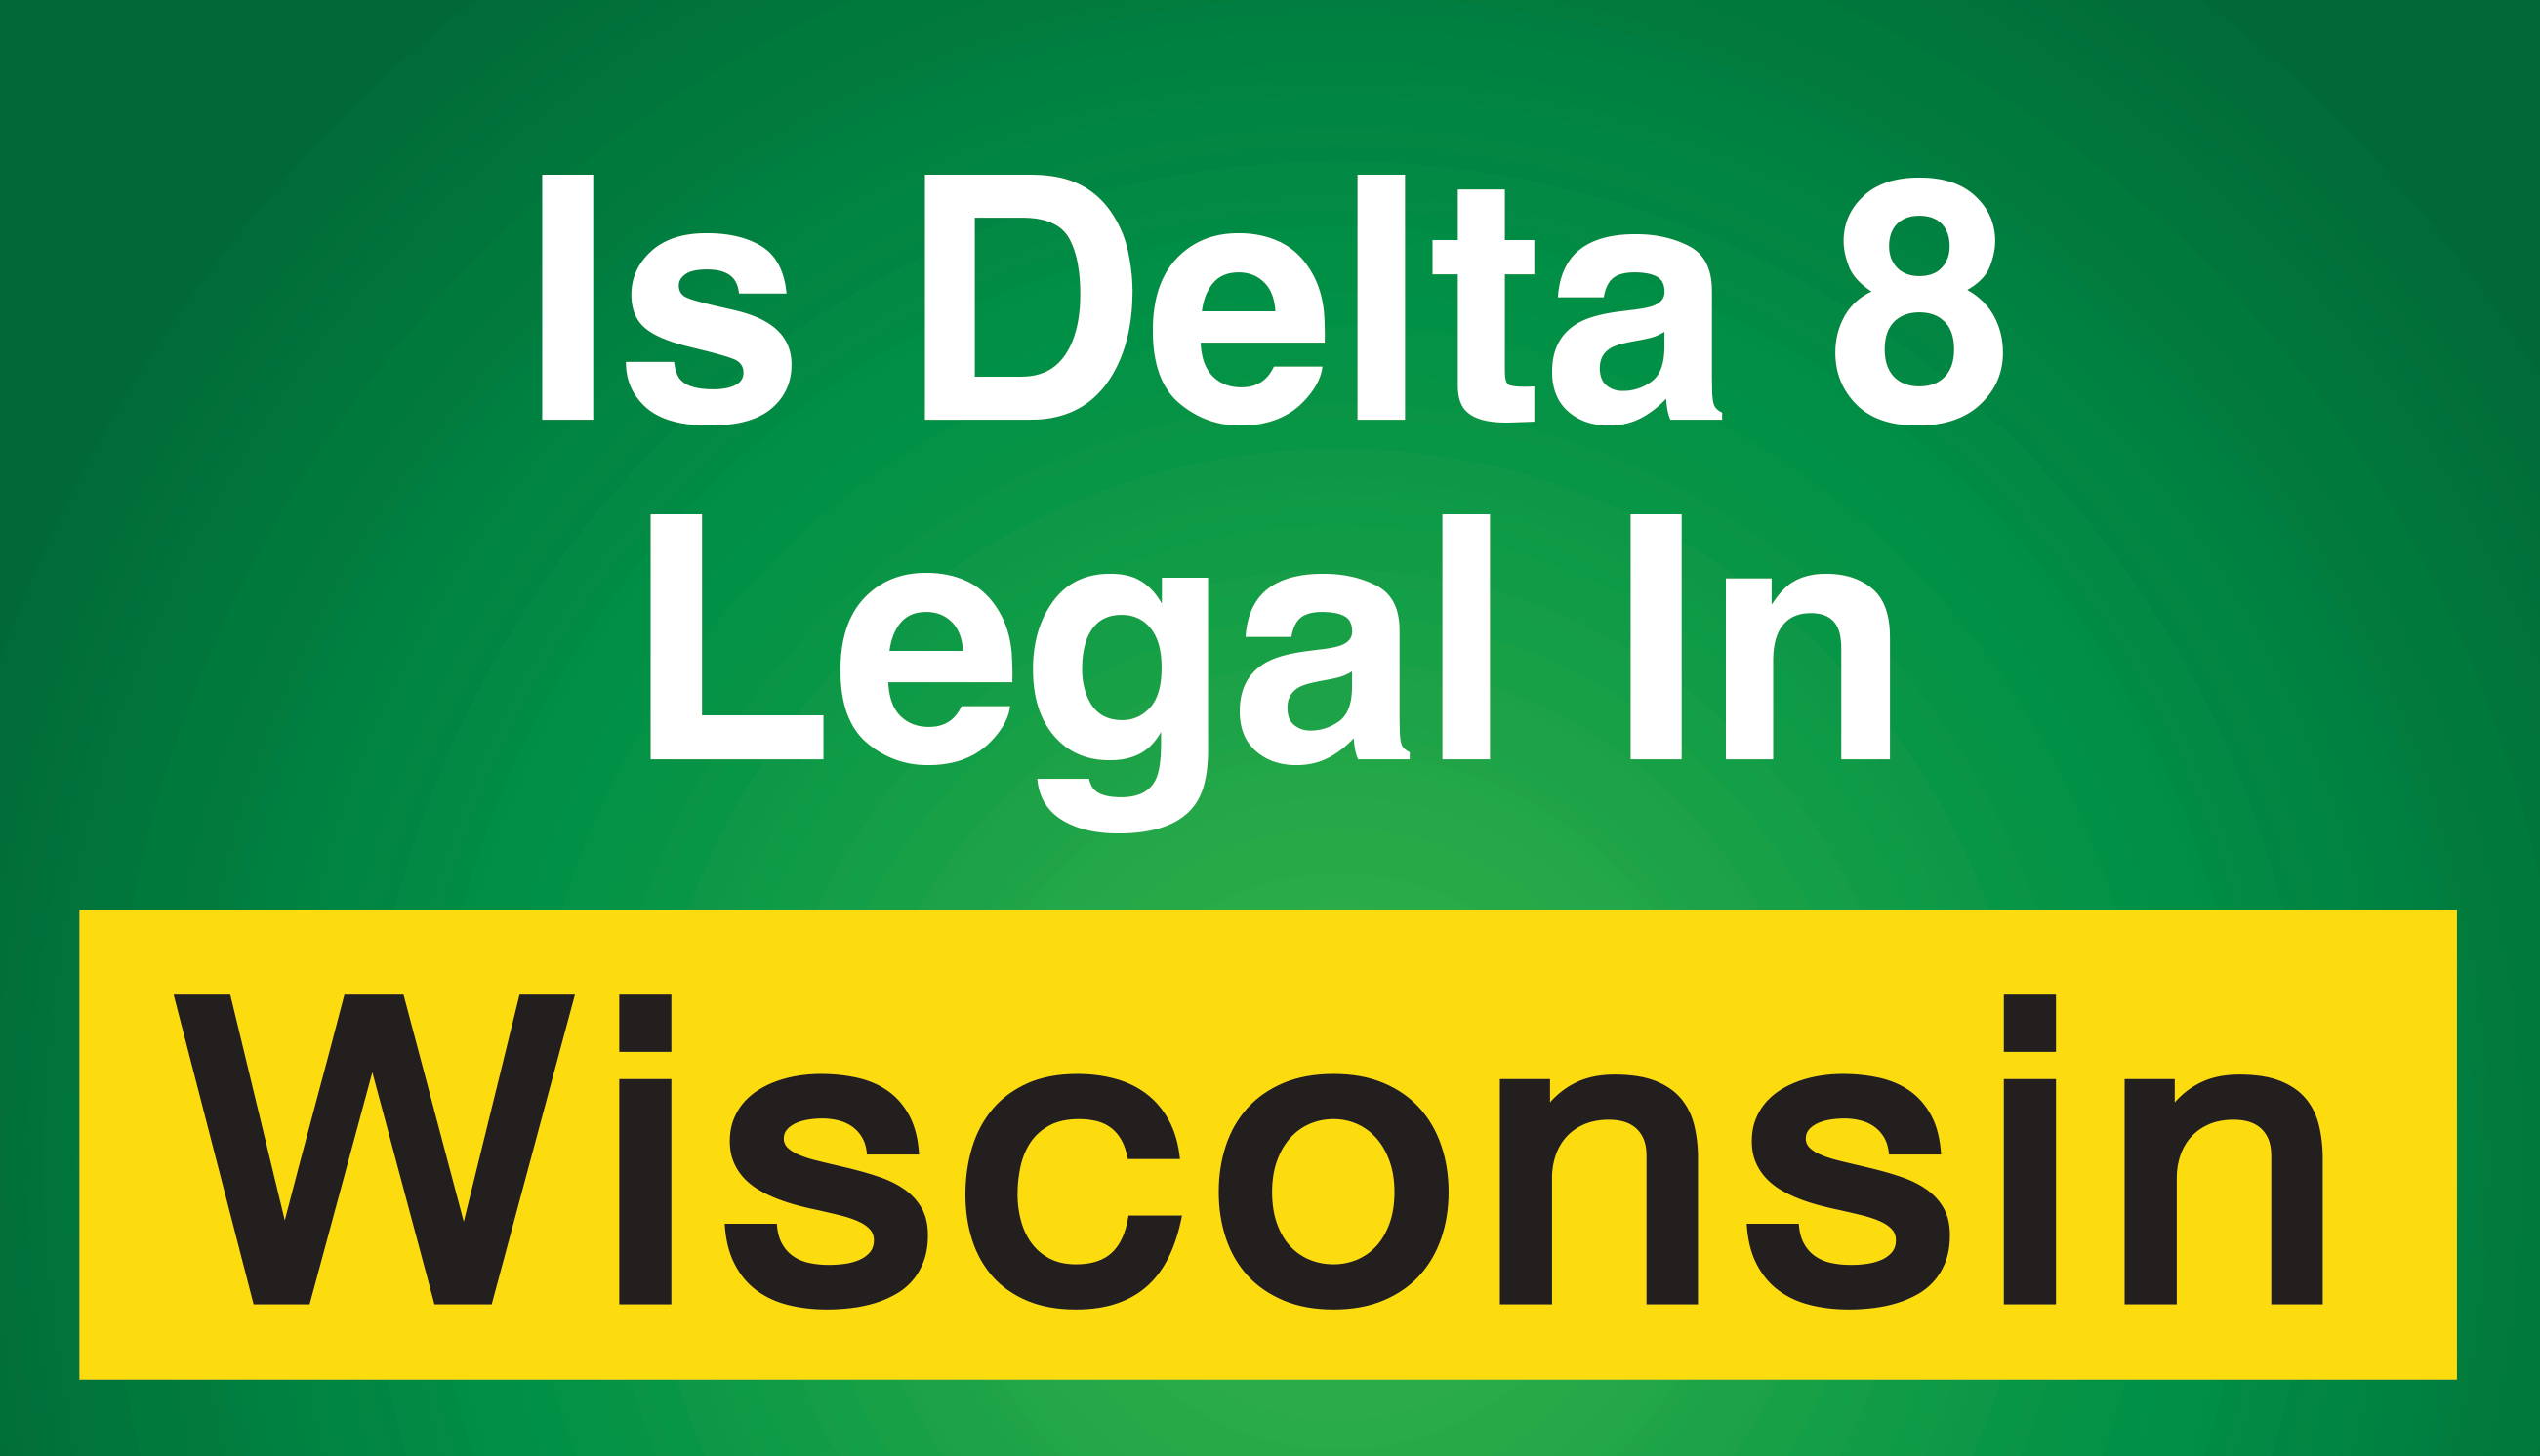 Is Delta 8 legal in Wisconsin?